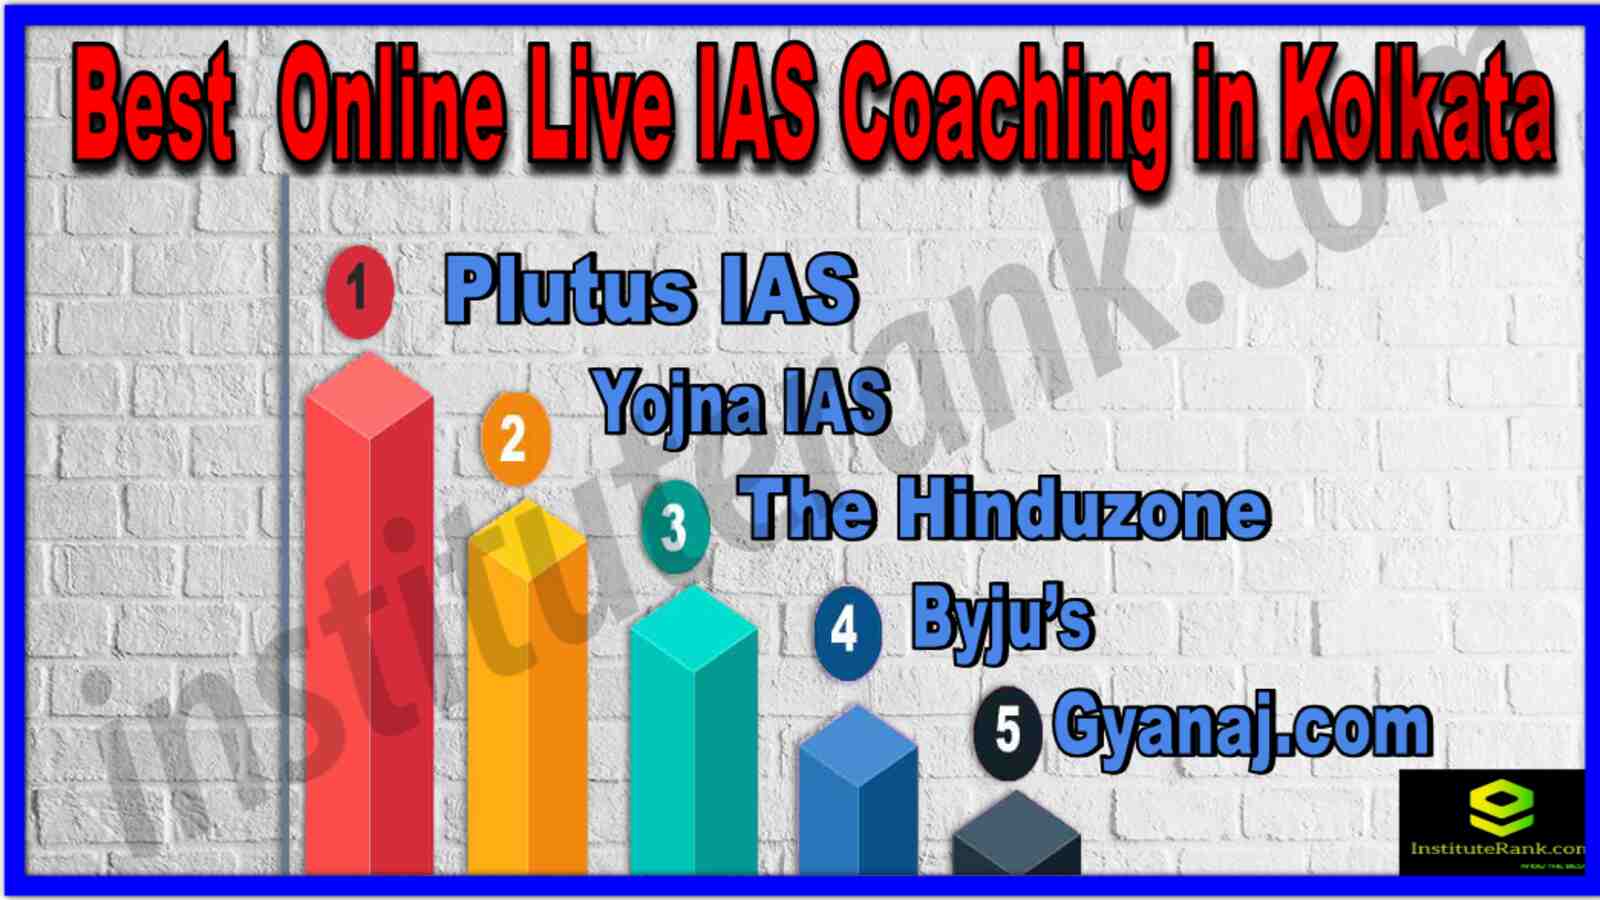 Best Online Live IAS Coaching in Kolkata